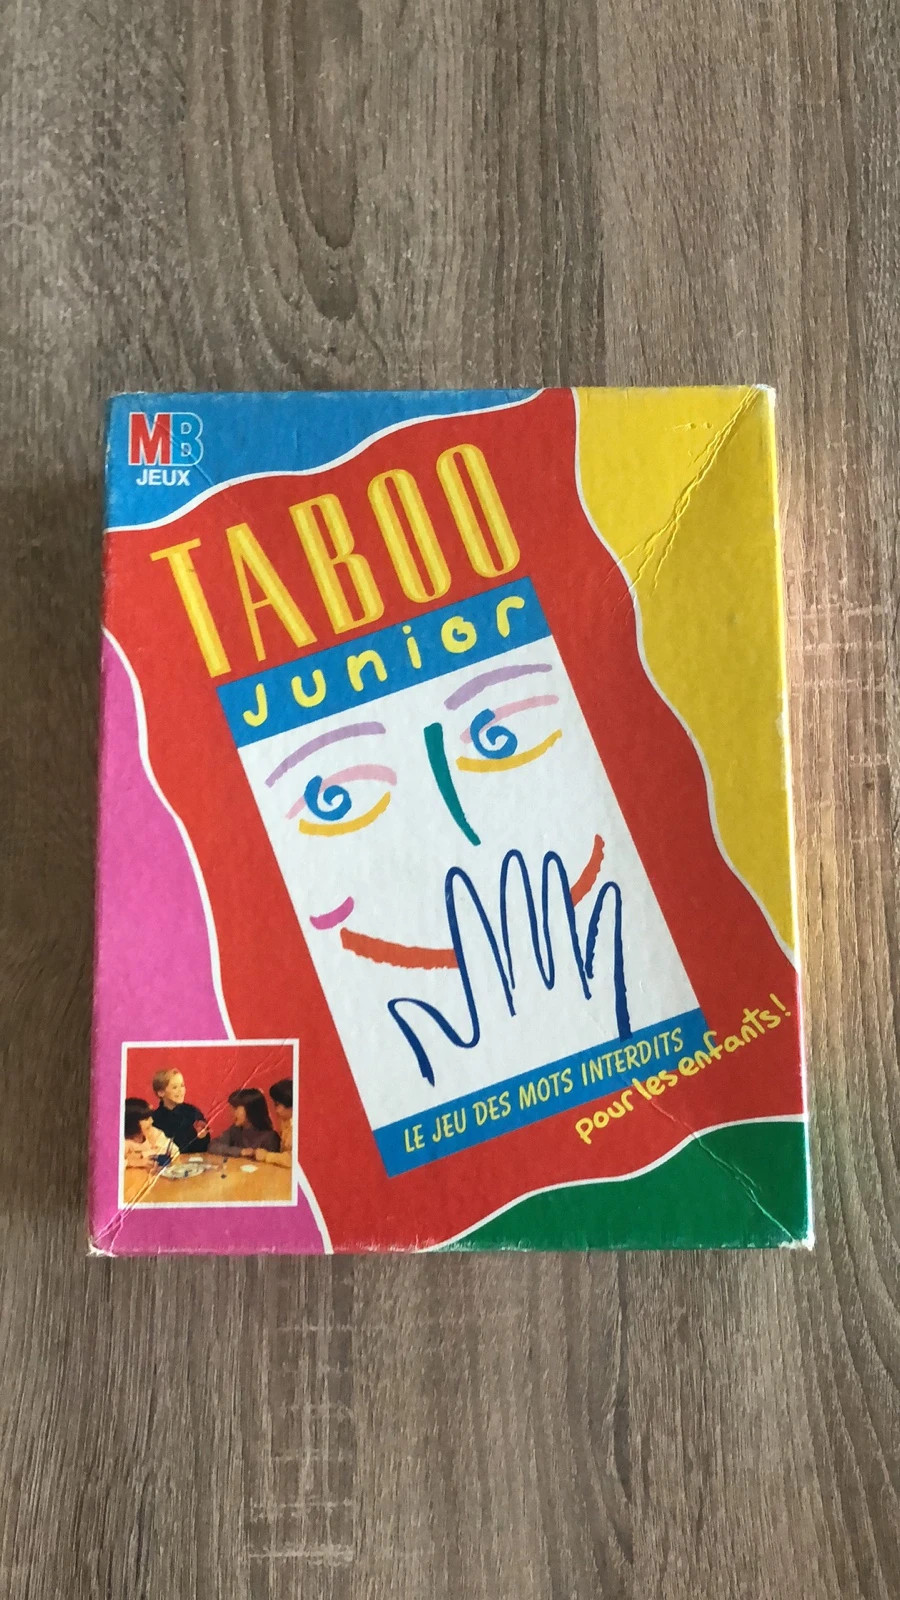 Taboo Junior